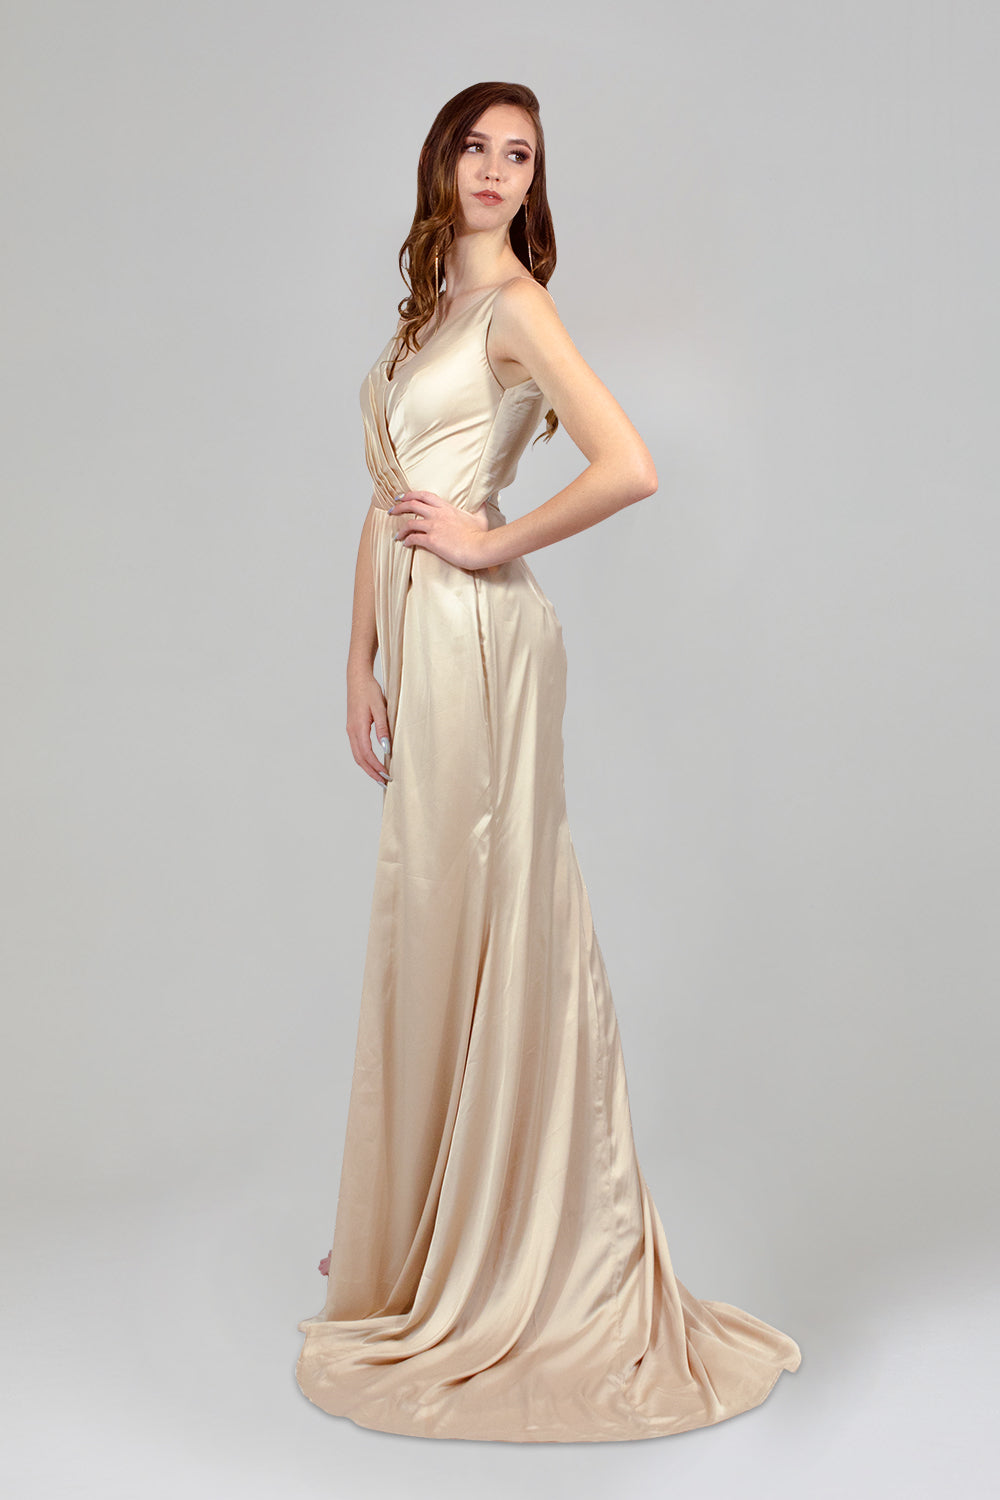 satin champagne gold bridesmaid dresses perth australian dressmaker envious bridal & formal